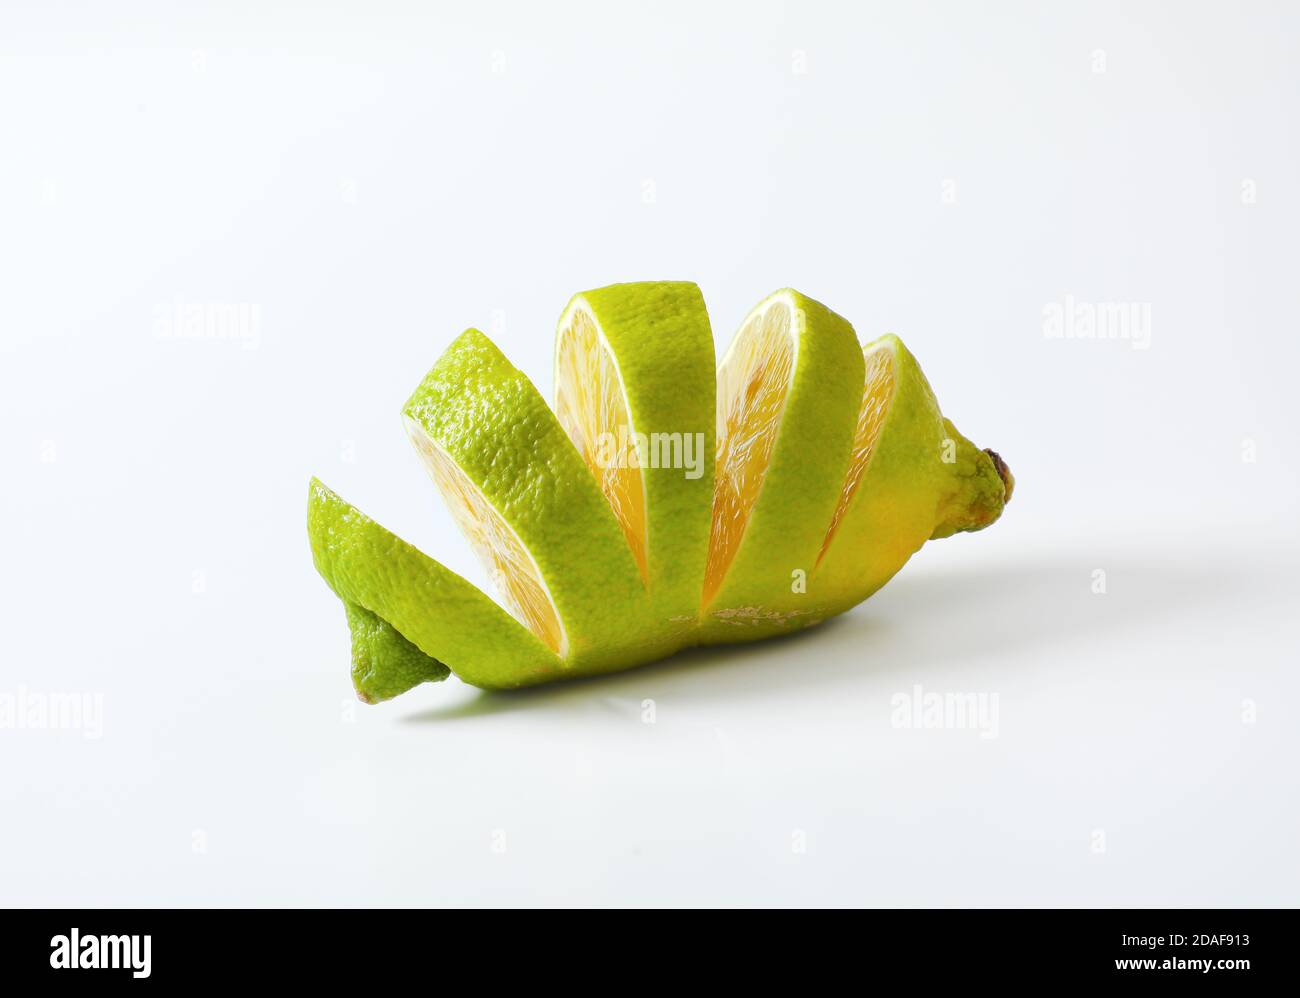 Lemon with green peel and yellow flesh, sliced Stock Photo